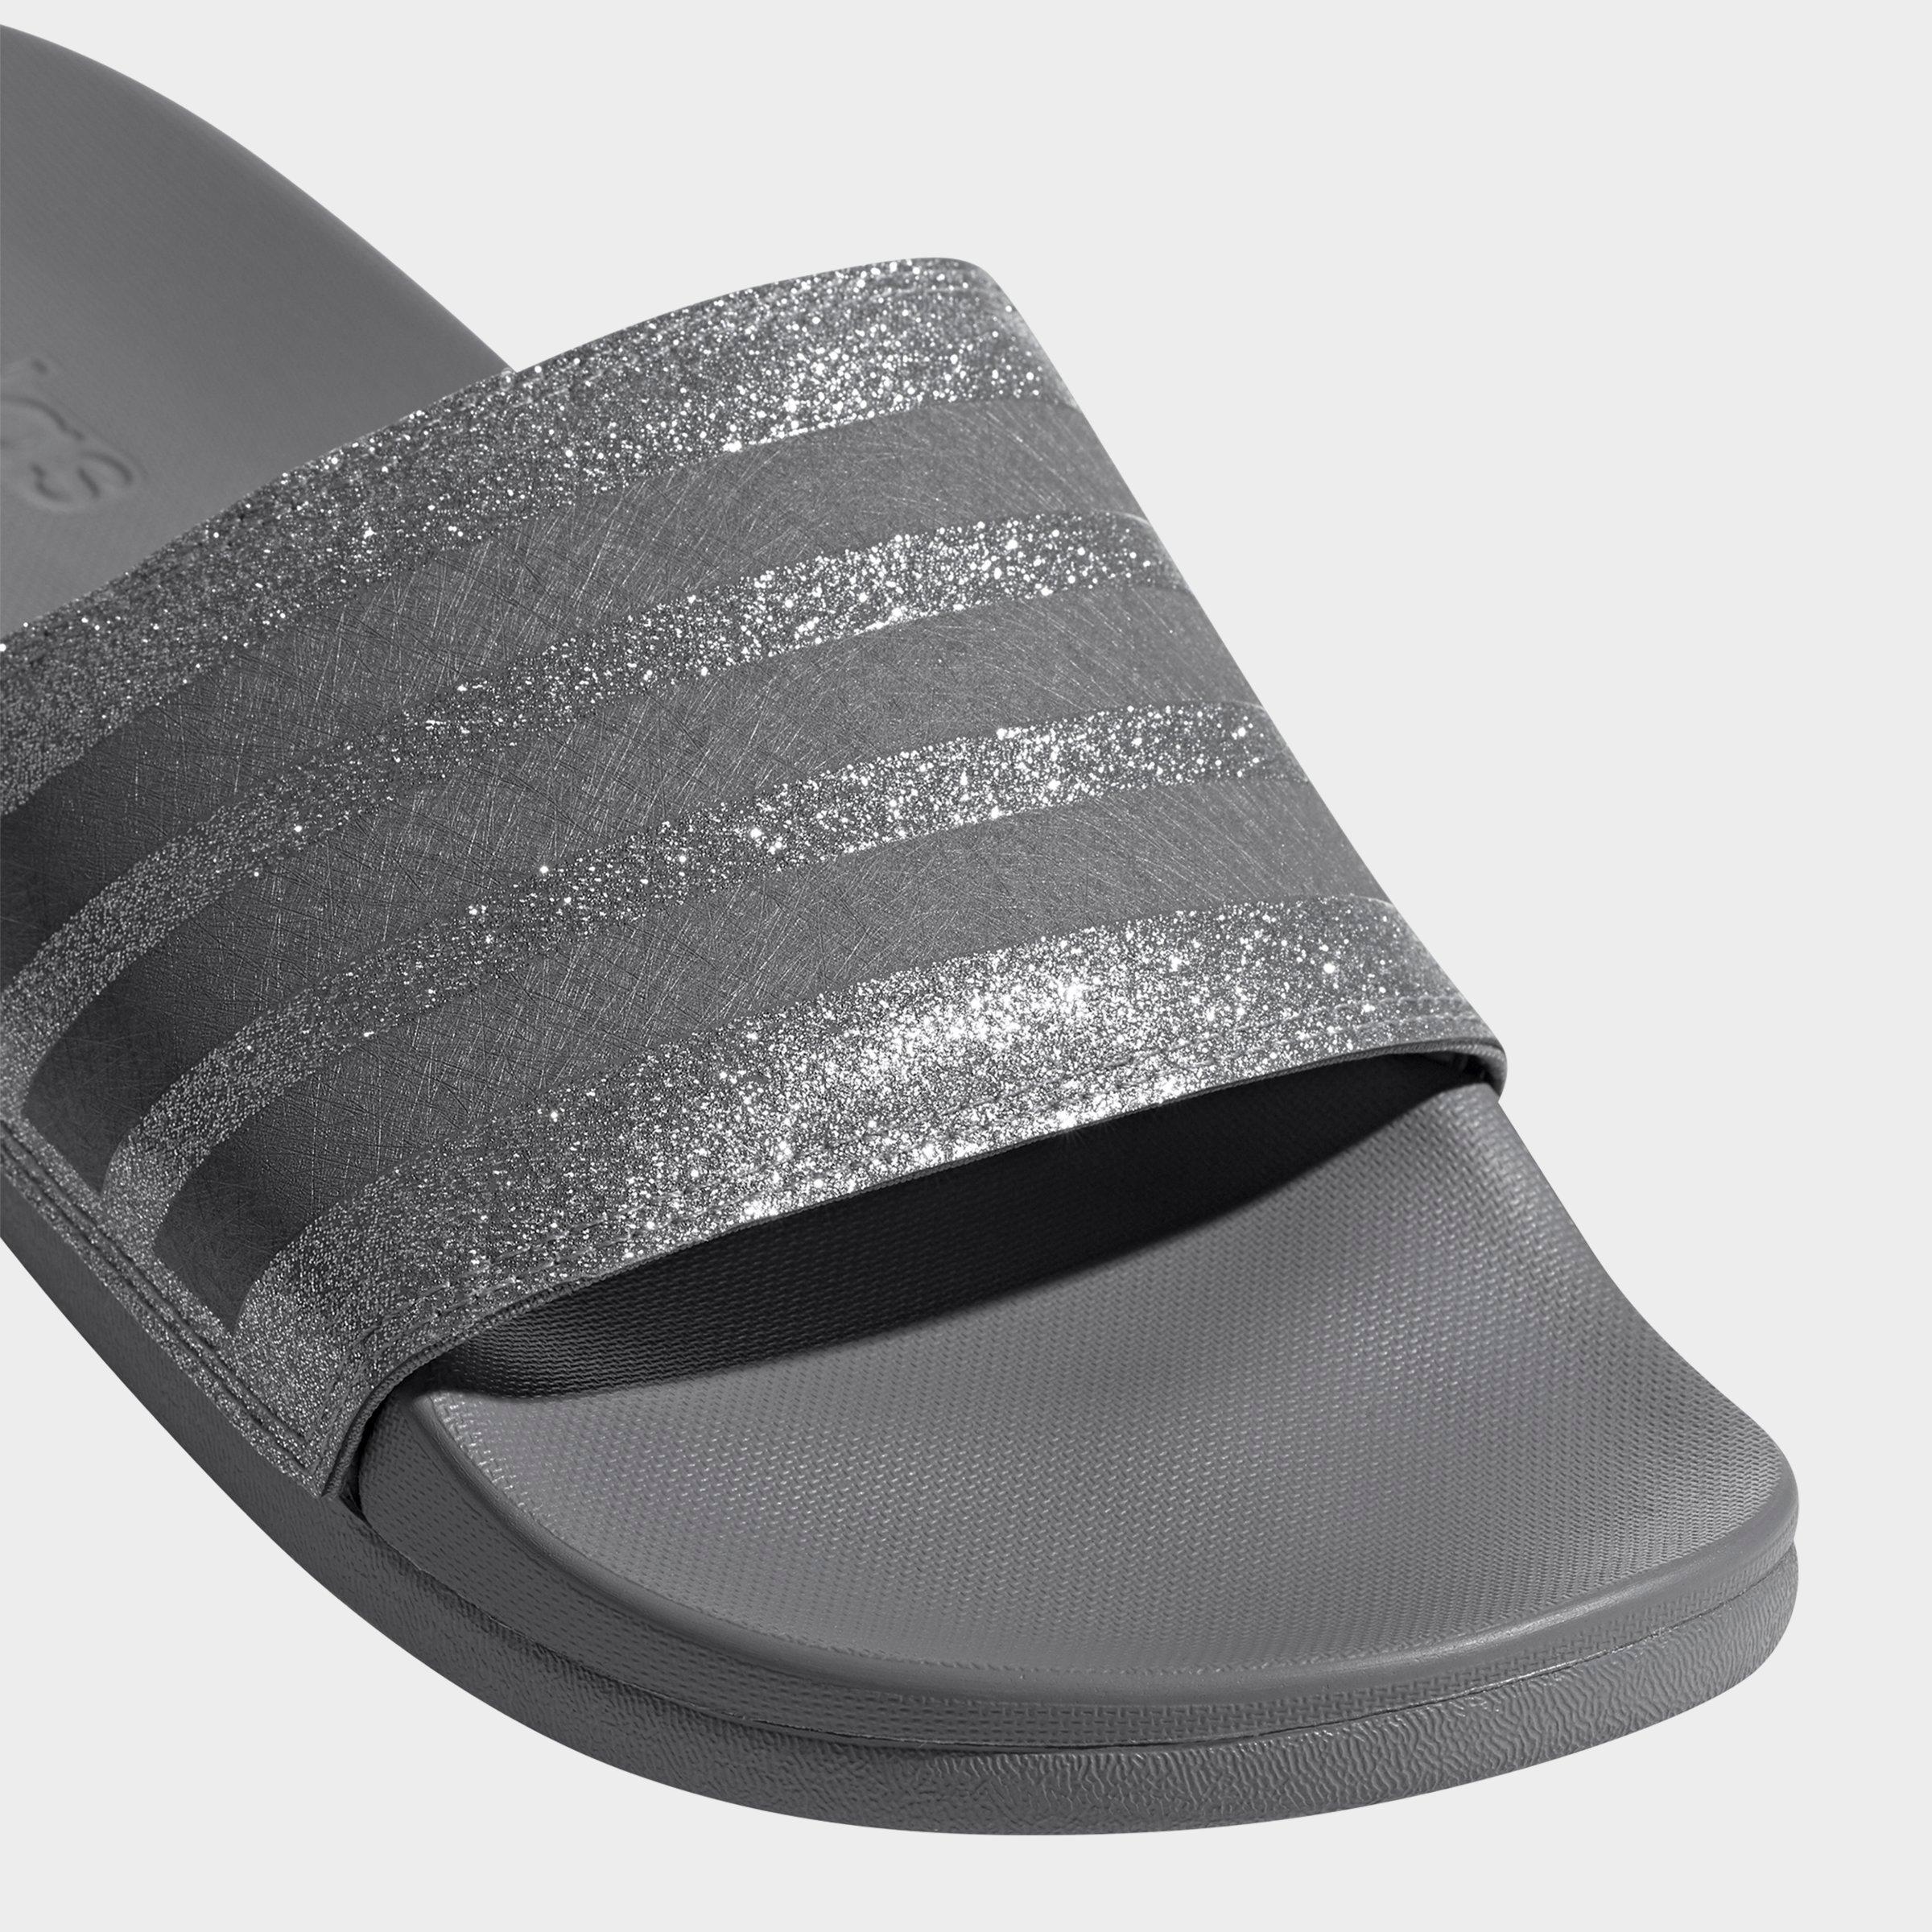 grey adidas slides